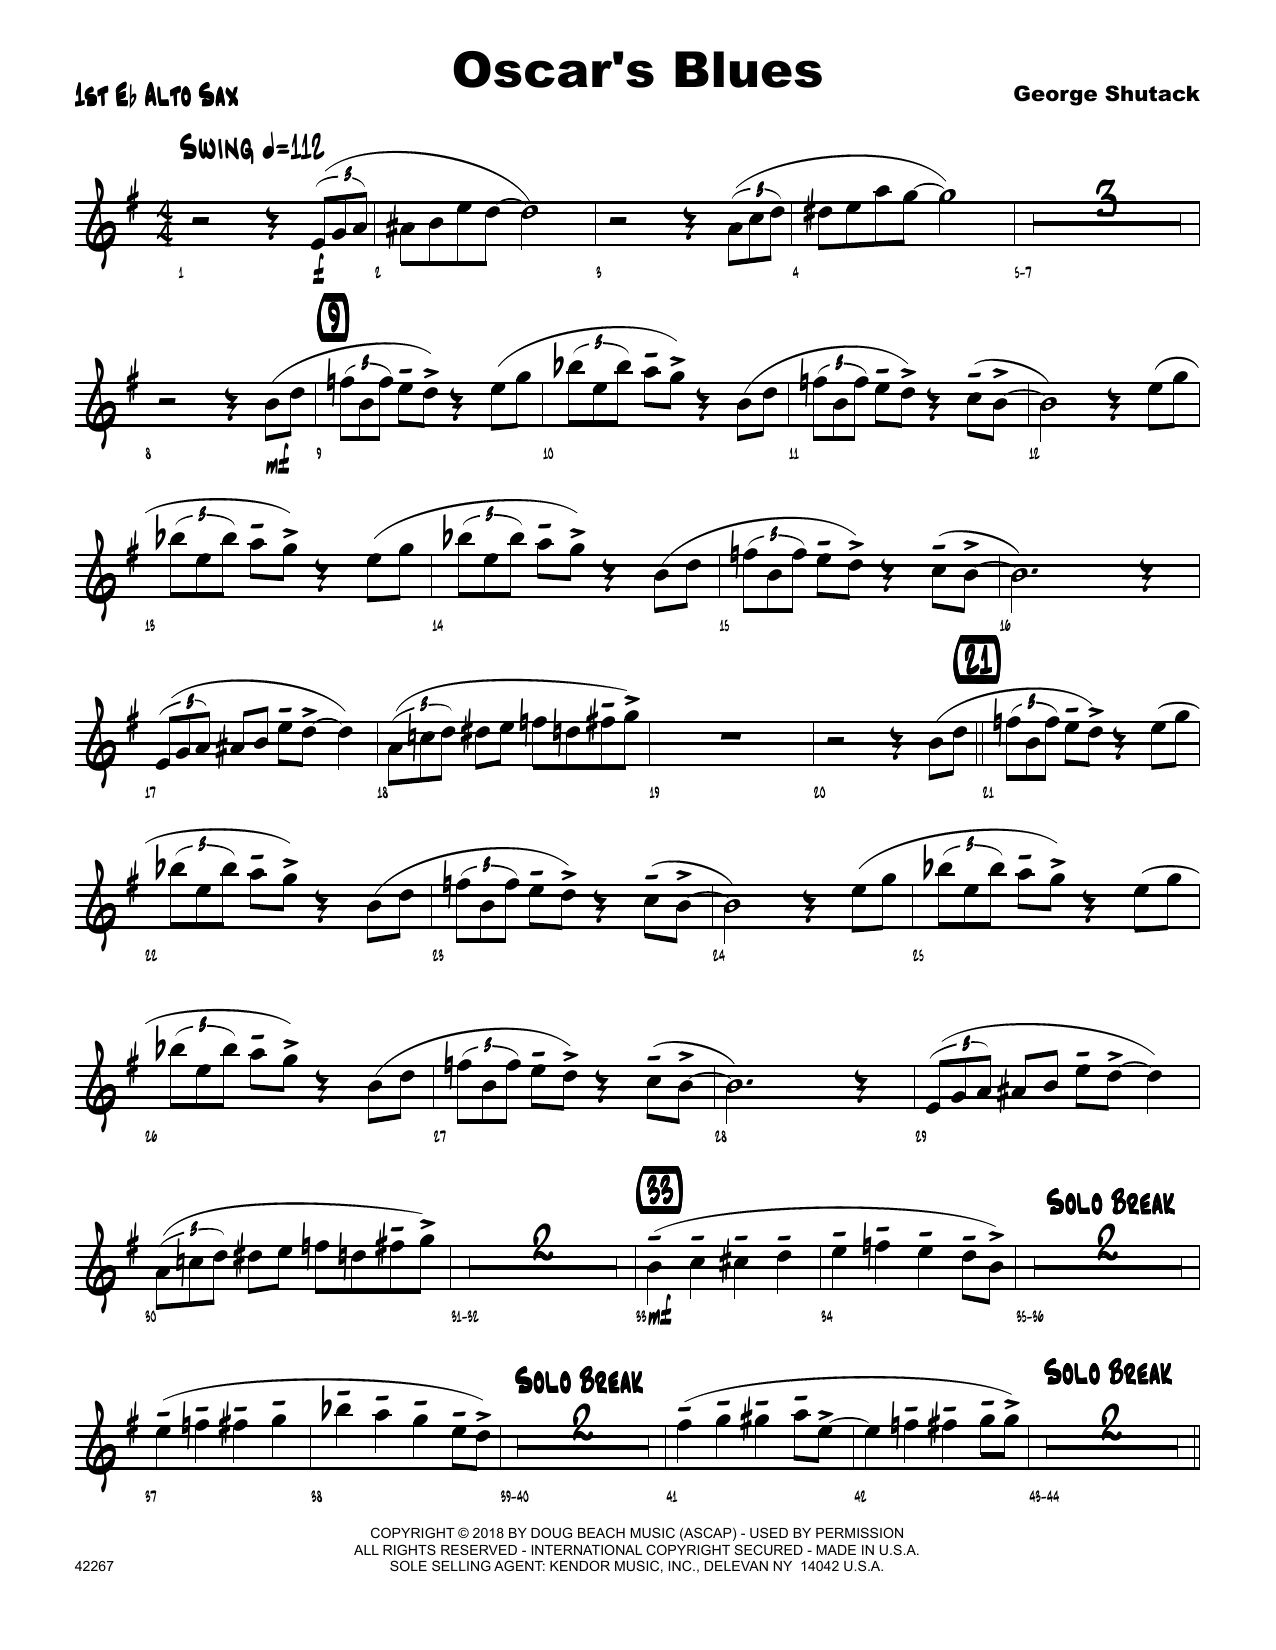 Download George Shutack Oscar's Blues - 1st Eb Alto Saxophone Sheet Music